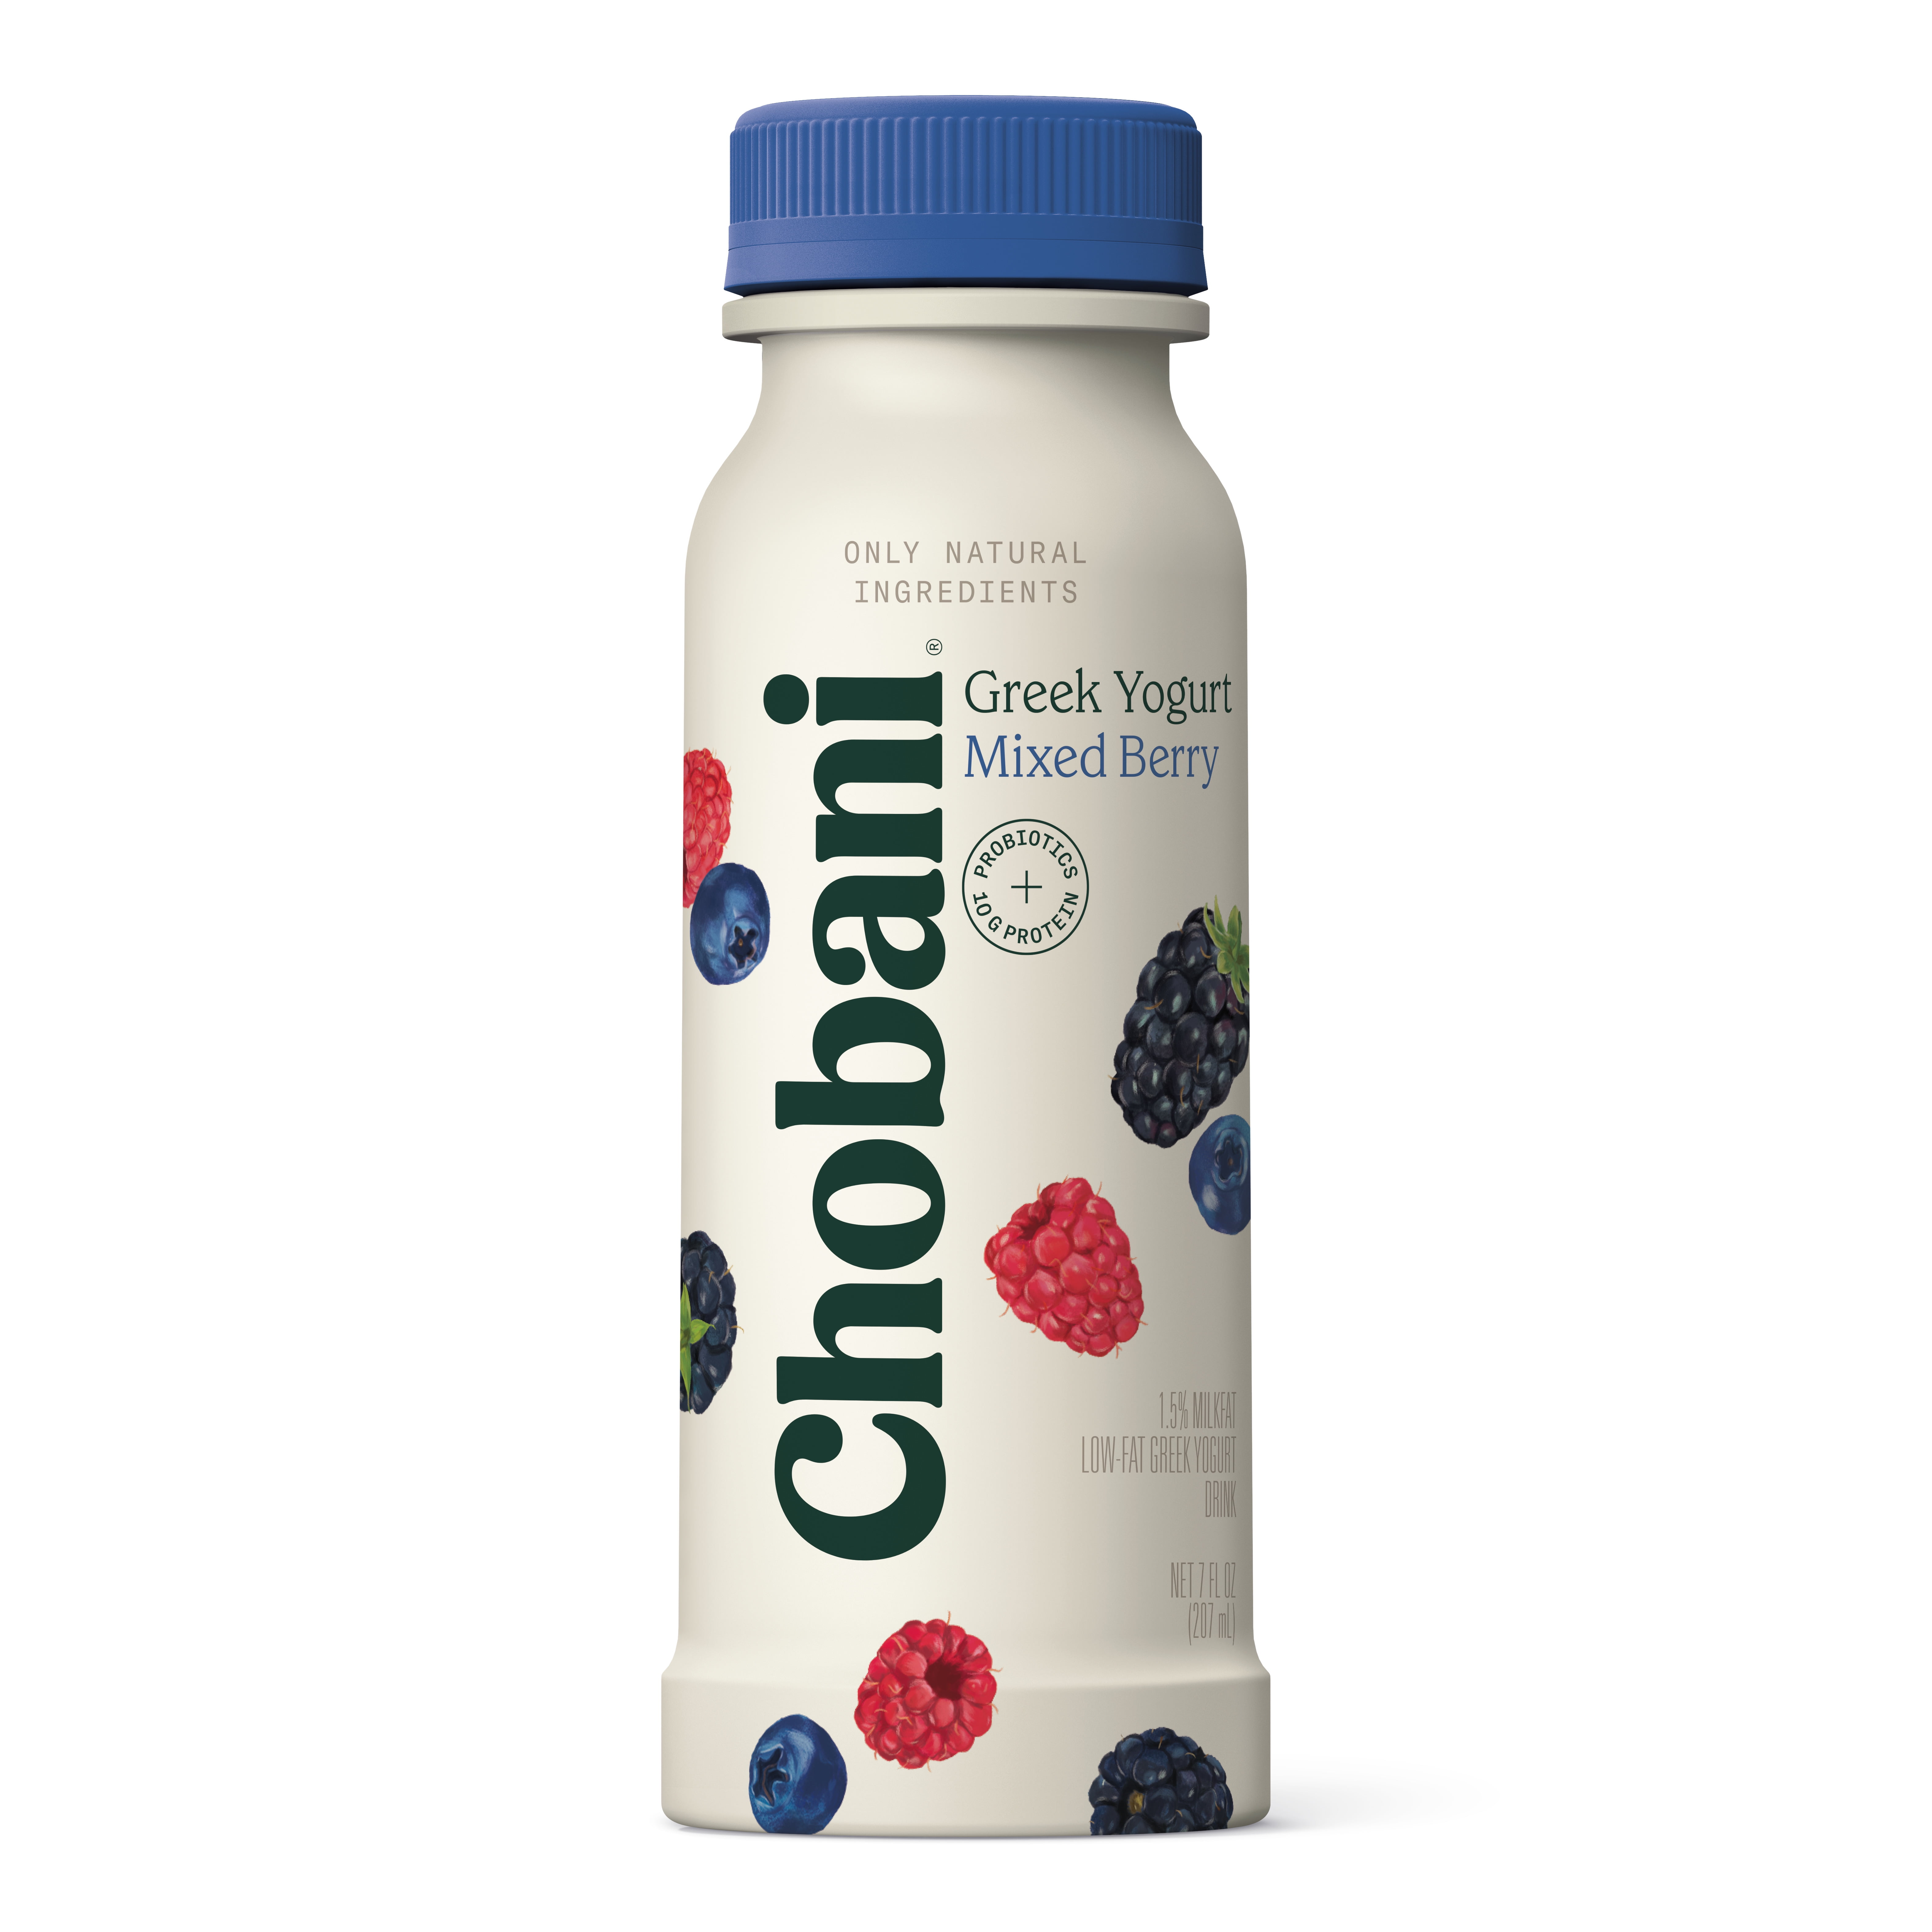 Chobani Greek Yogurt Drink with Probiotics, Mixed Berry 7 oz